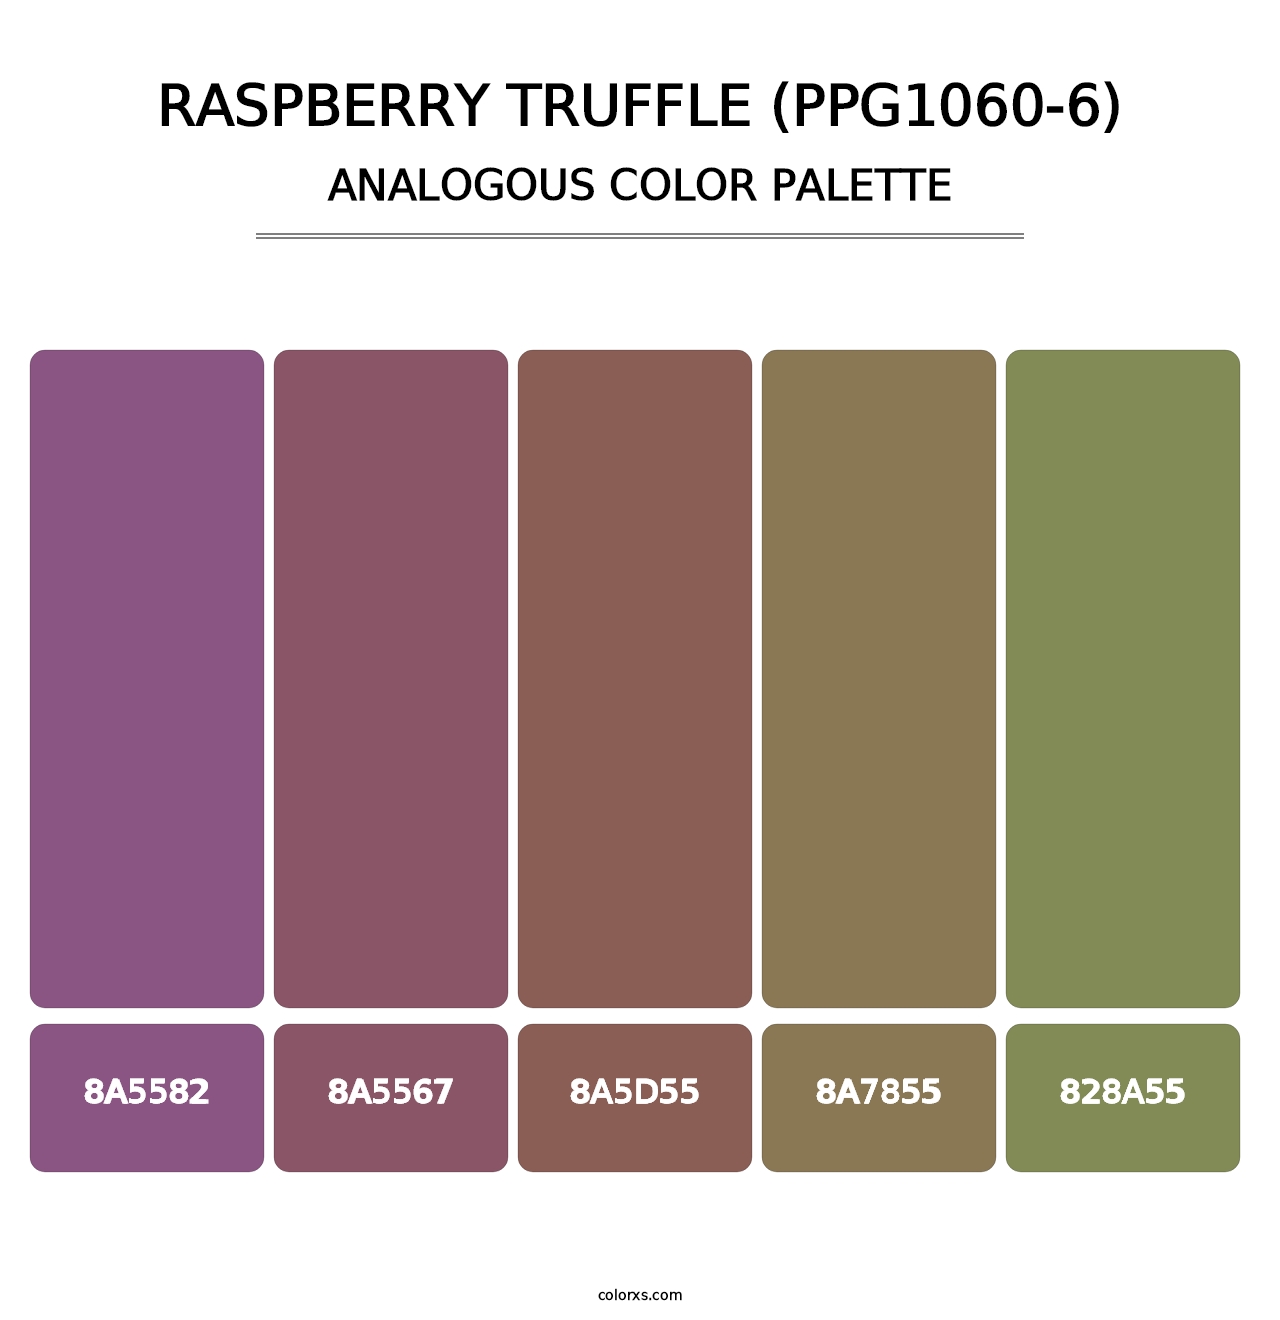 Raspberry Truffle (PPG1060-6) - Analogous Color Palette